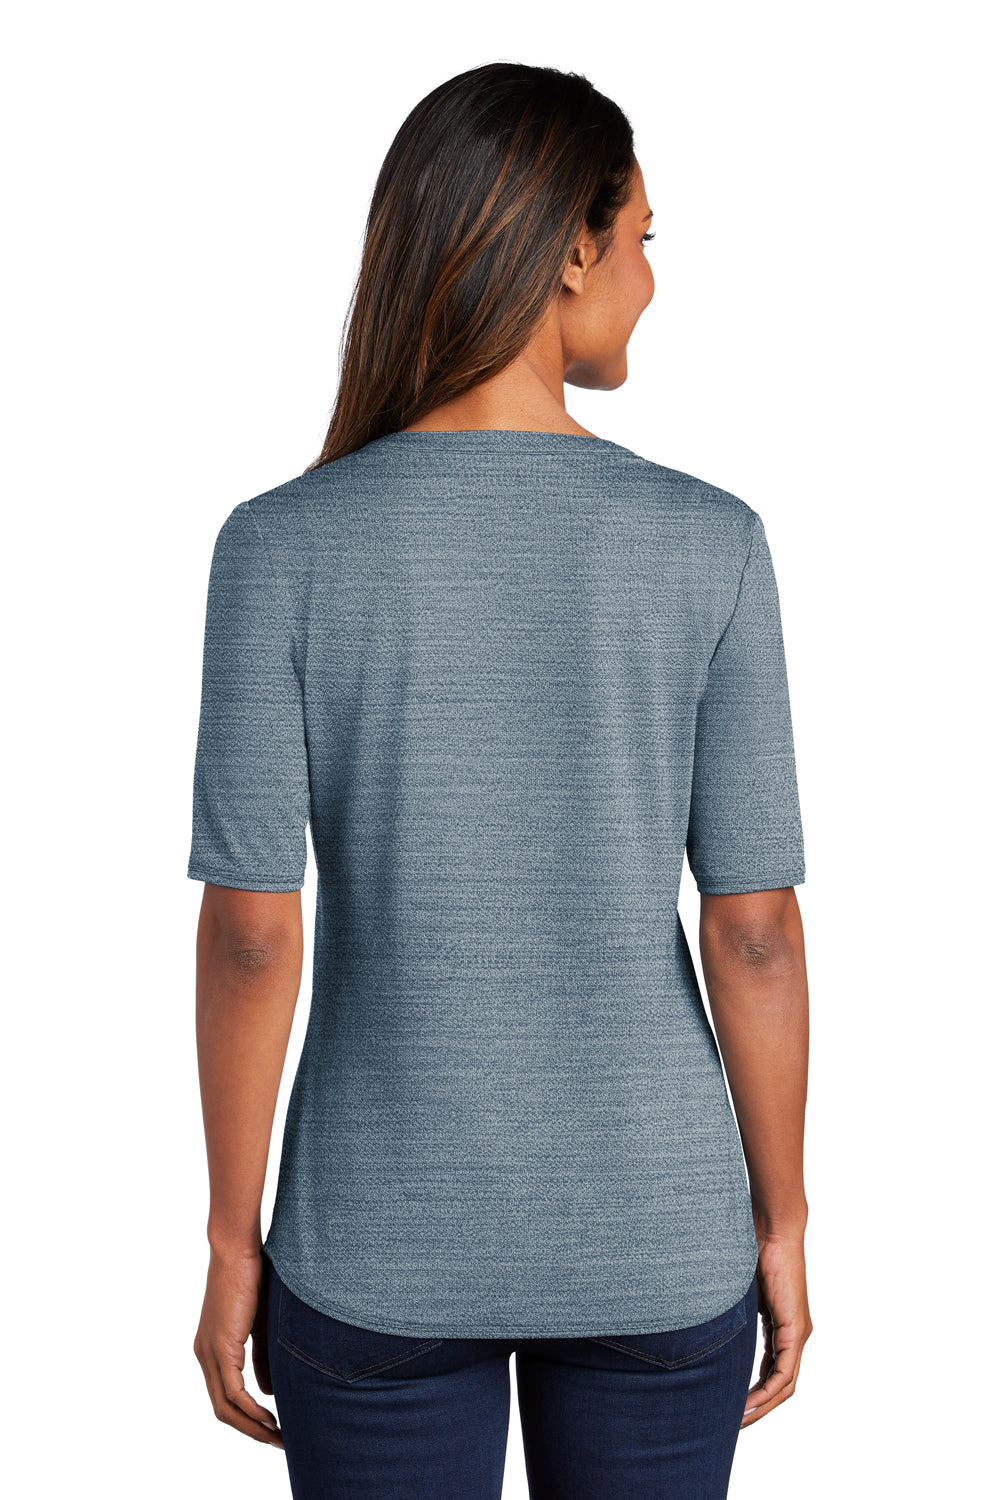 Port Authority Womens Stretch Short Sleeve Polo Shirt Regatta Blue/Gusty Grey Side